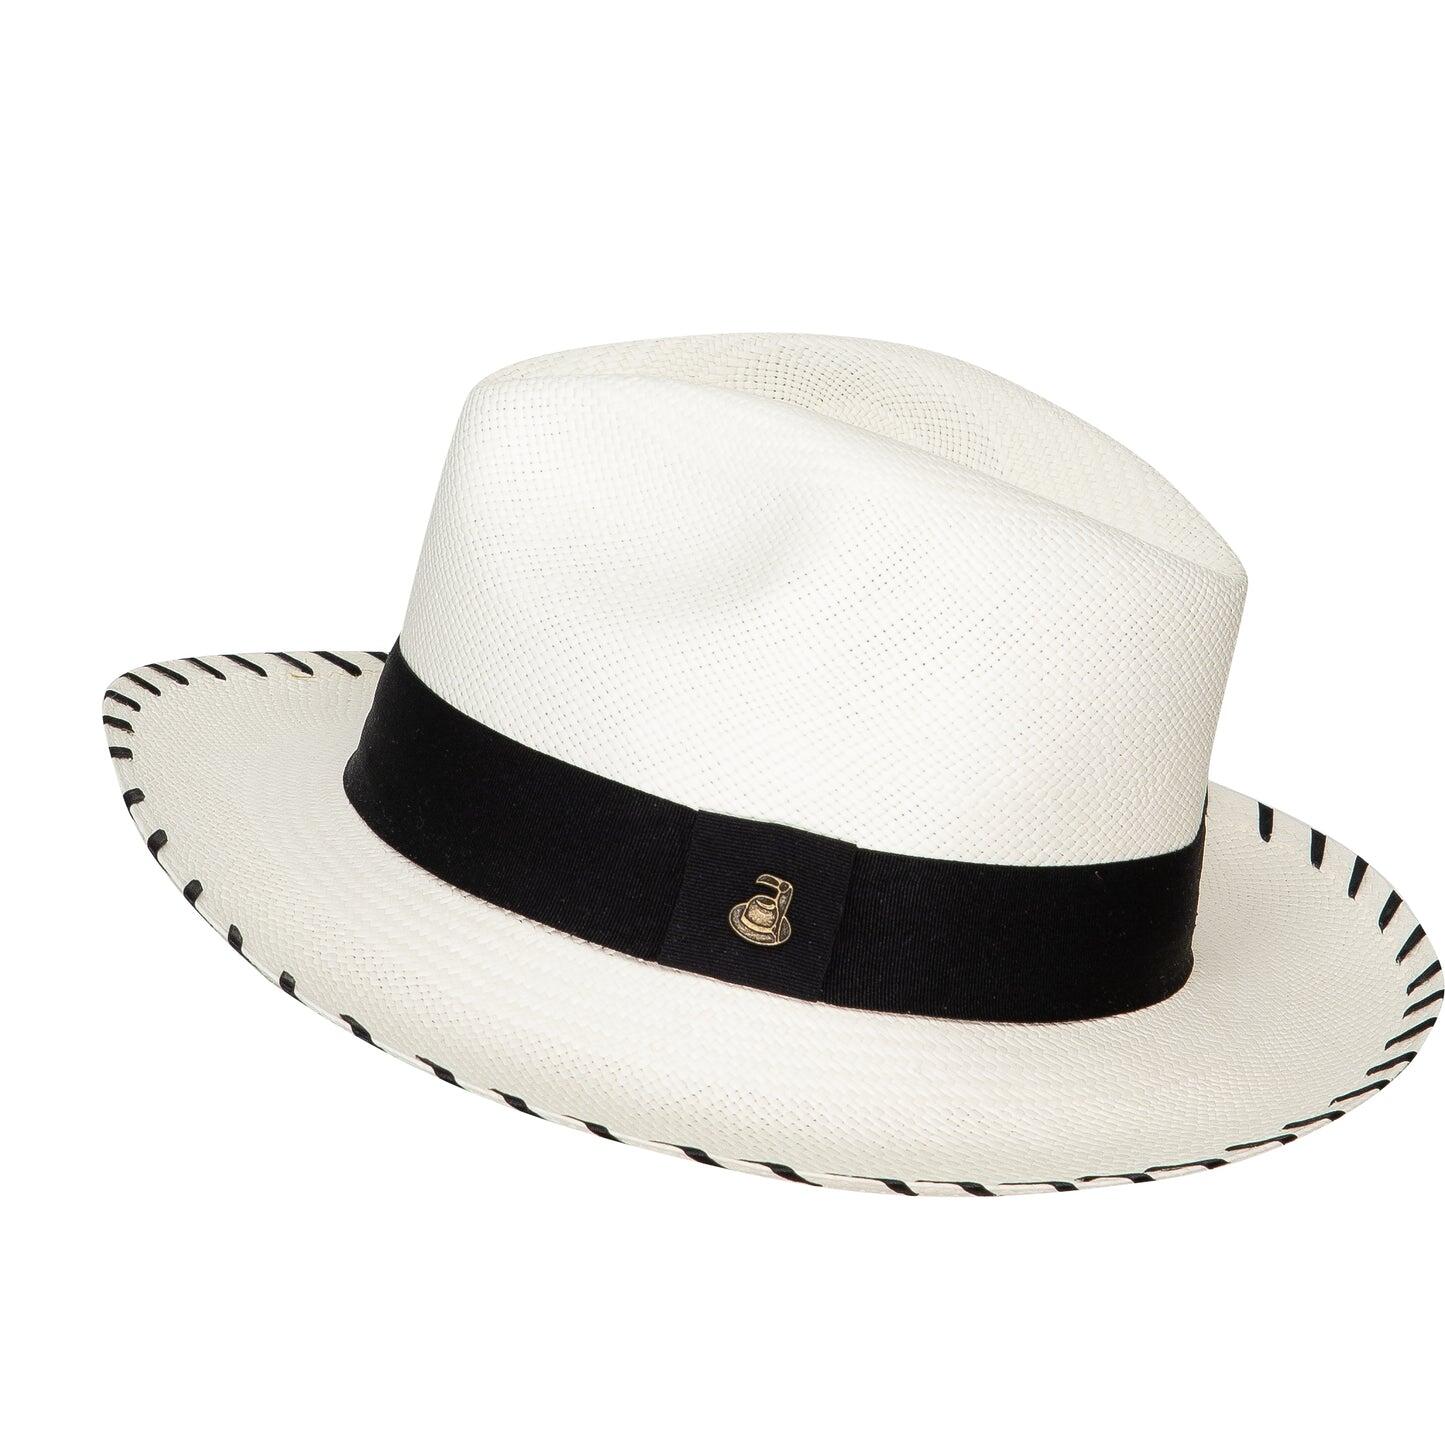 Panama Hat White Zebra with Black Band